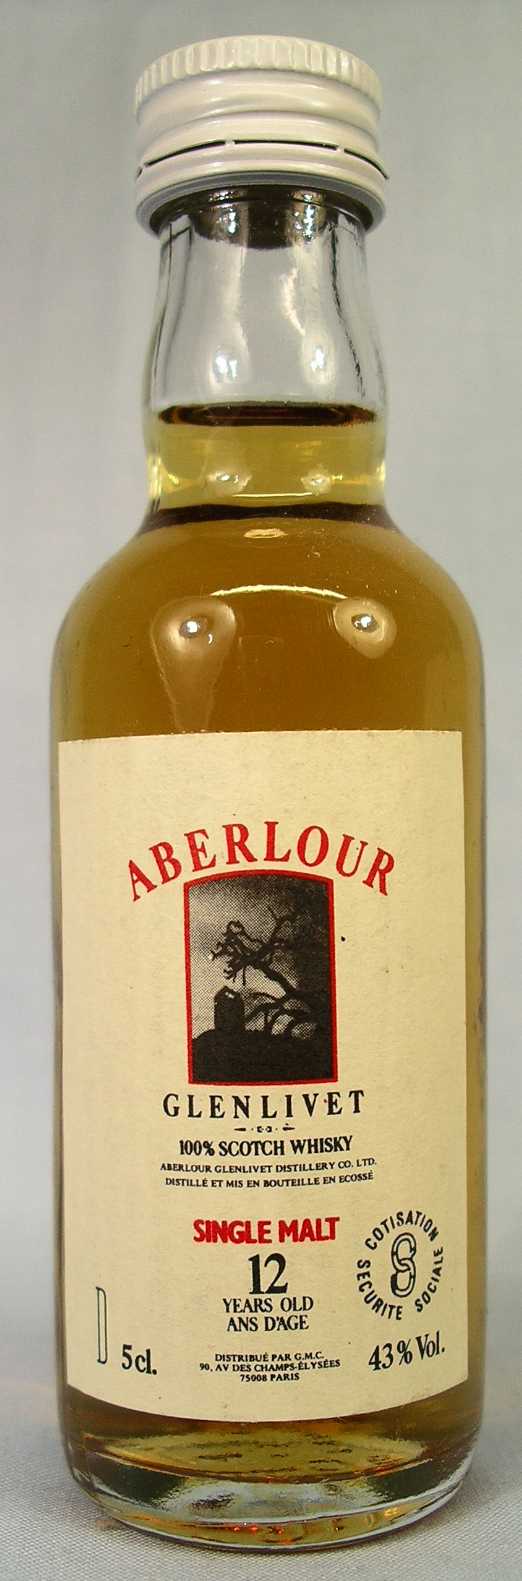 ABERLOUR - GLENLIVET - 100% S.W.